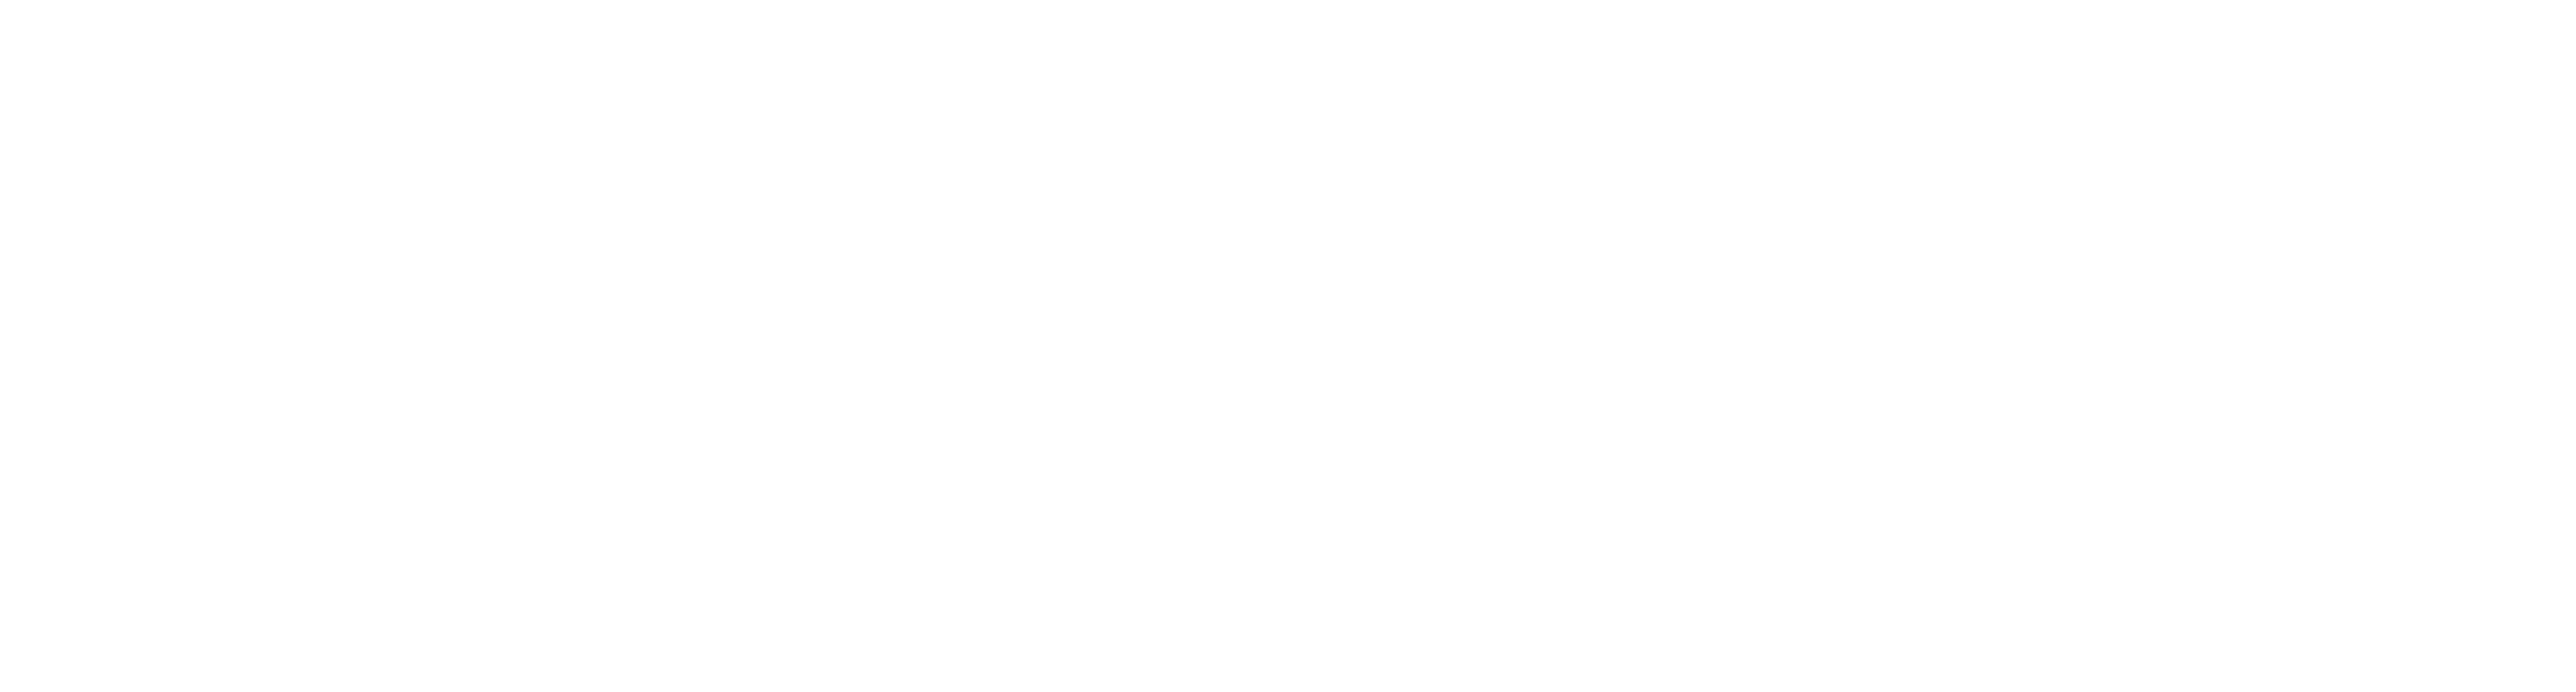 FinisherPix